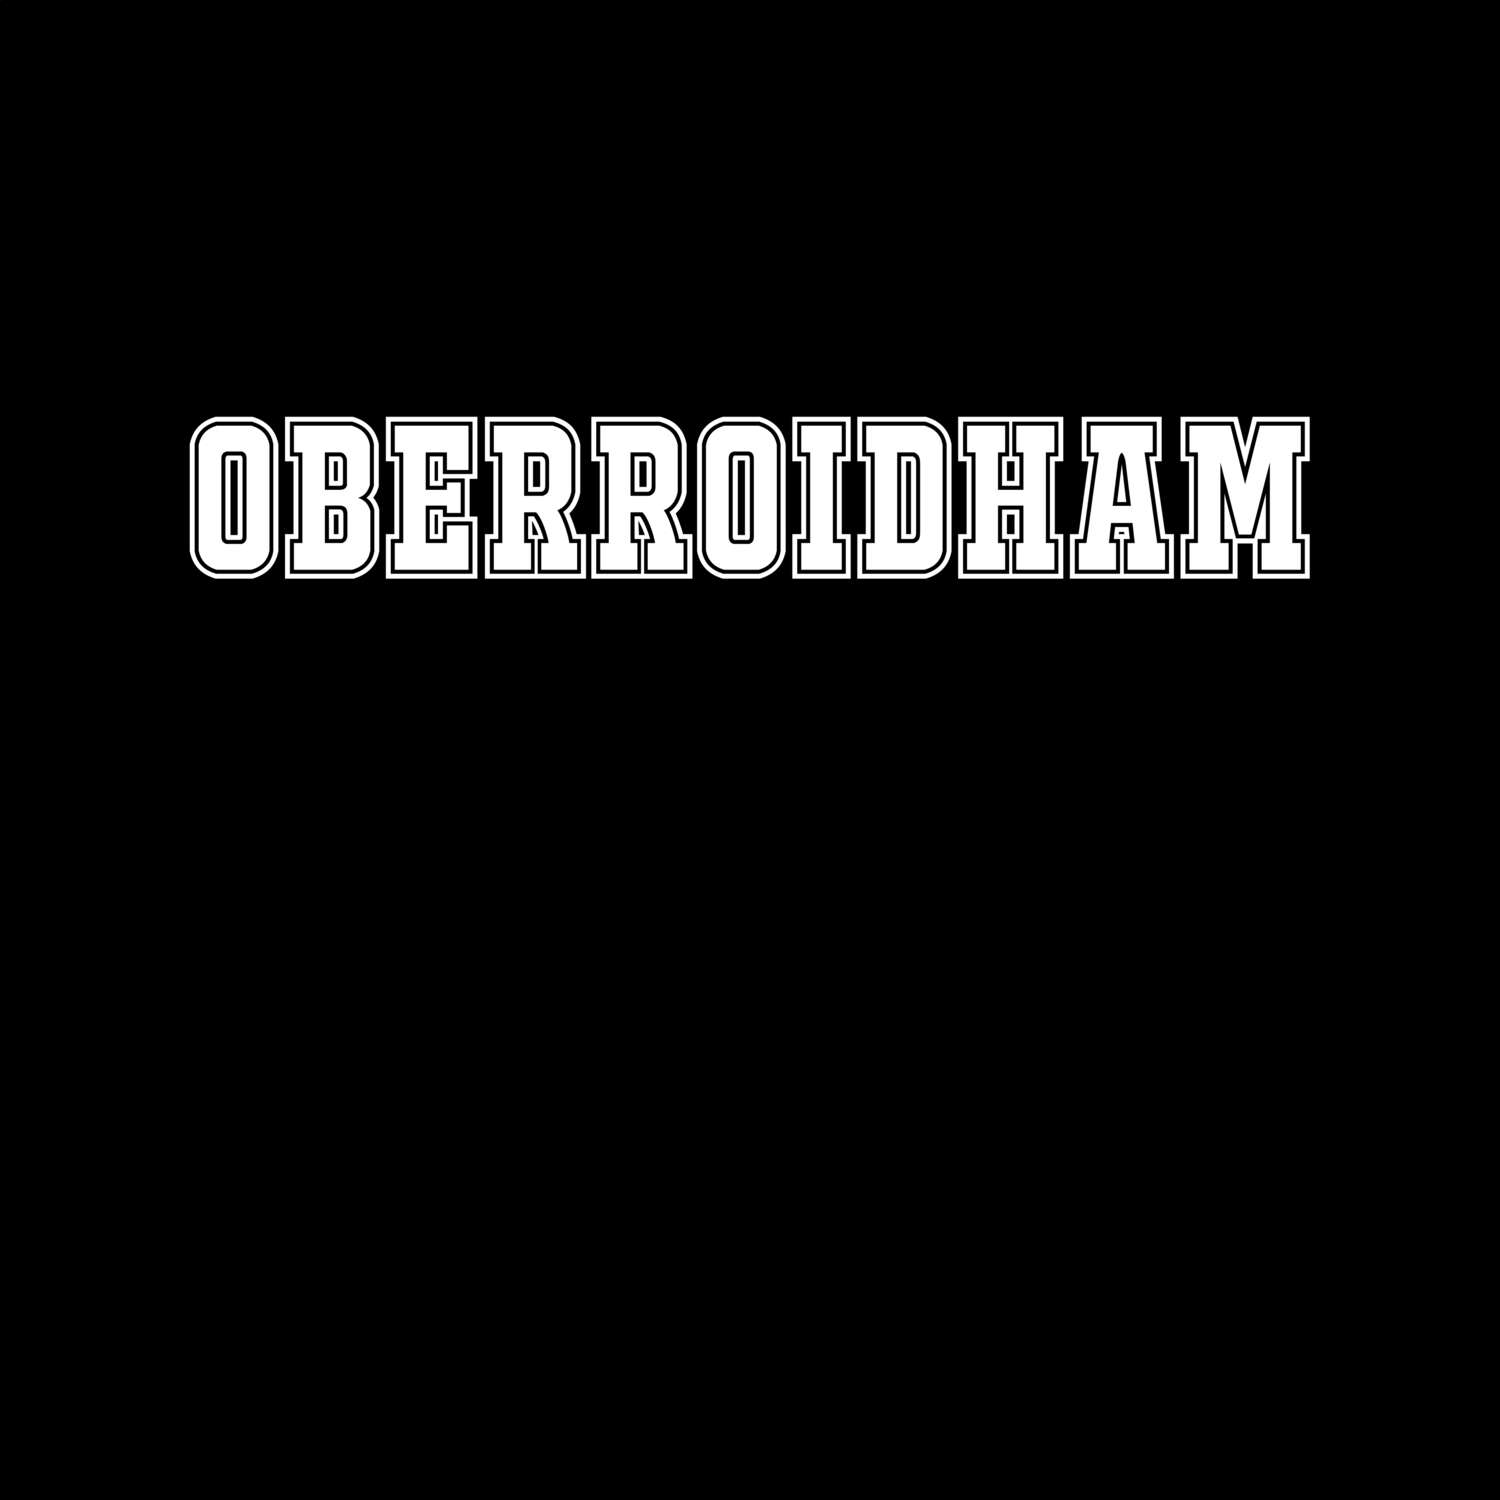 Oberroidham T-Shirt »Classic«